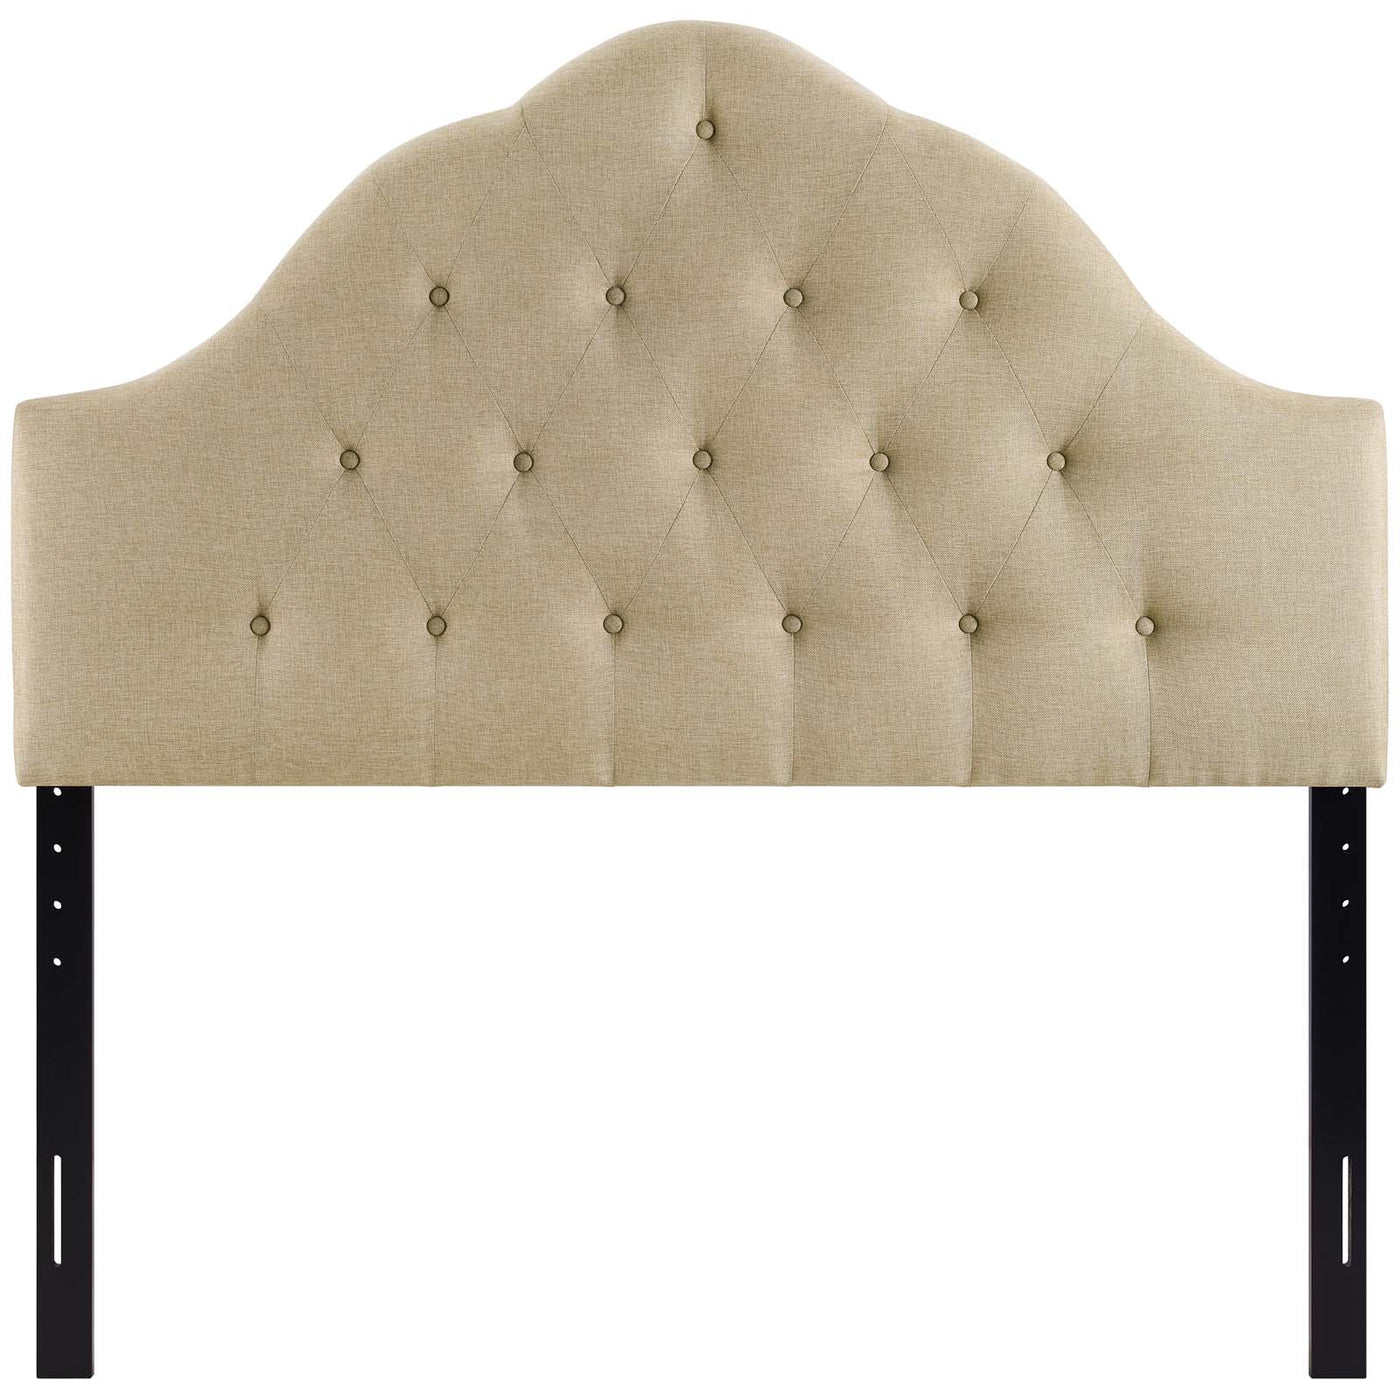 Sovereign Queen Upholstered Fabric Headboard